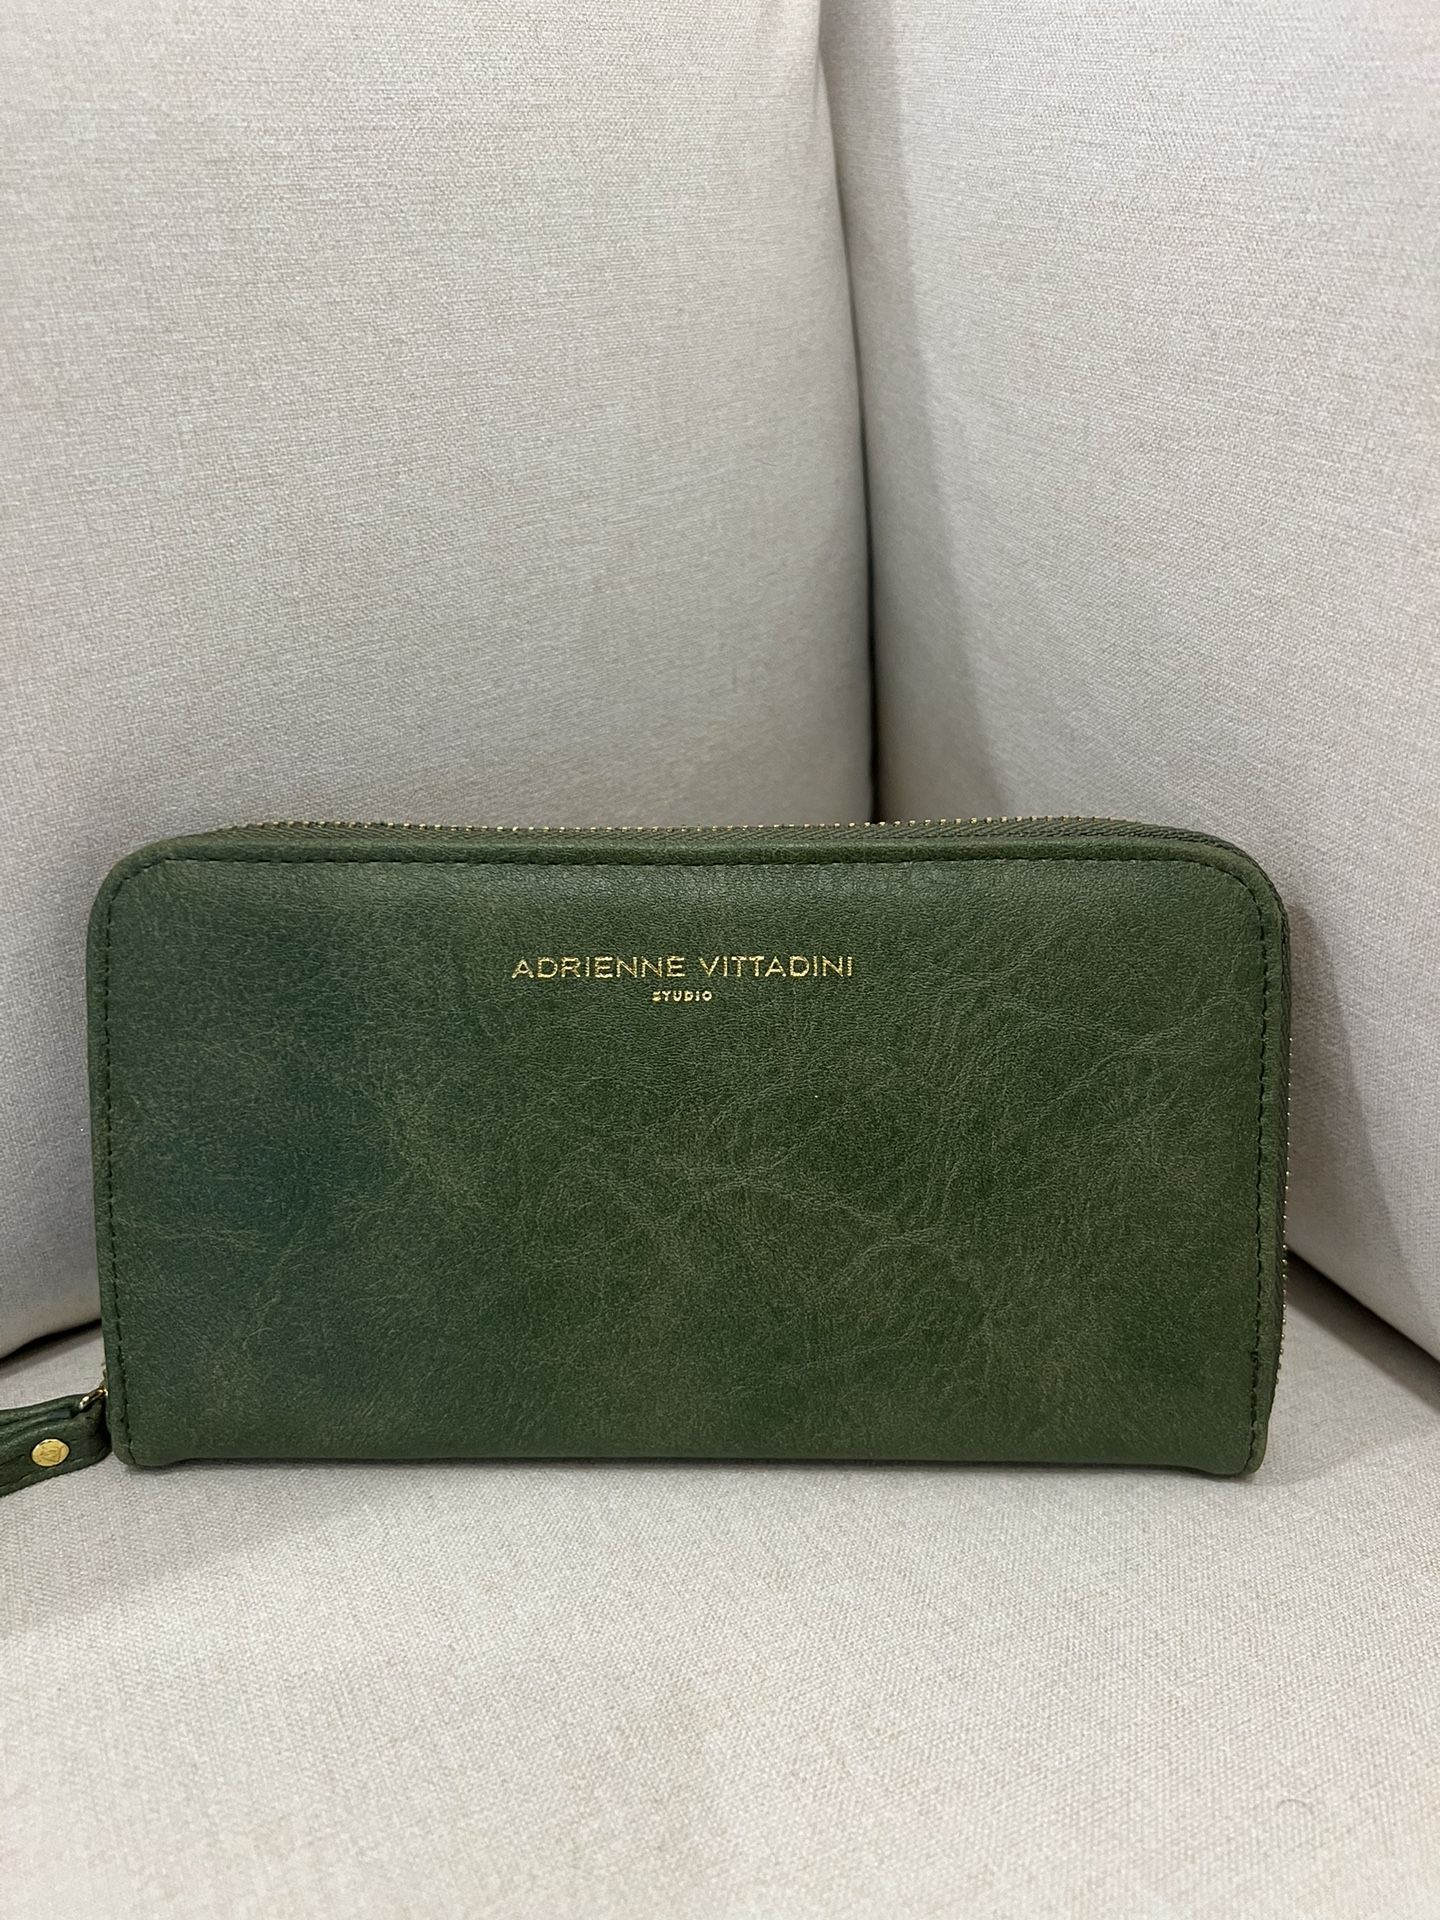 Adrienne Vittadini USB Charging Wallet Wristlet Zip Around Green Excellent